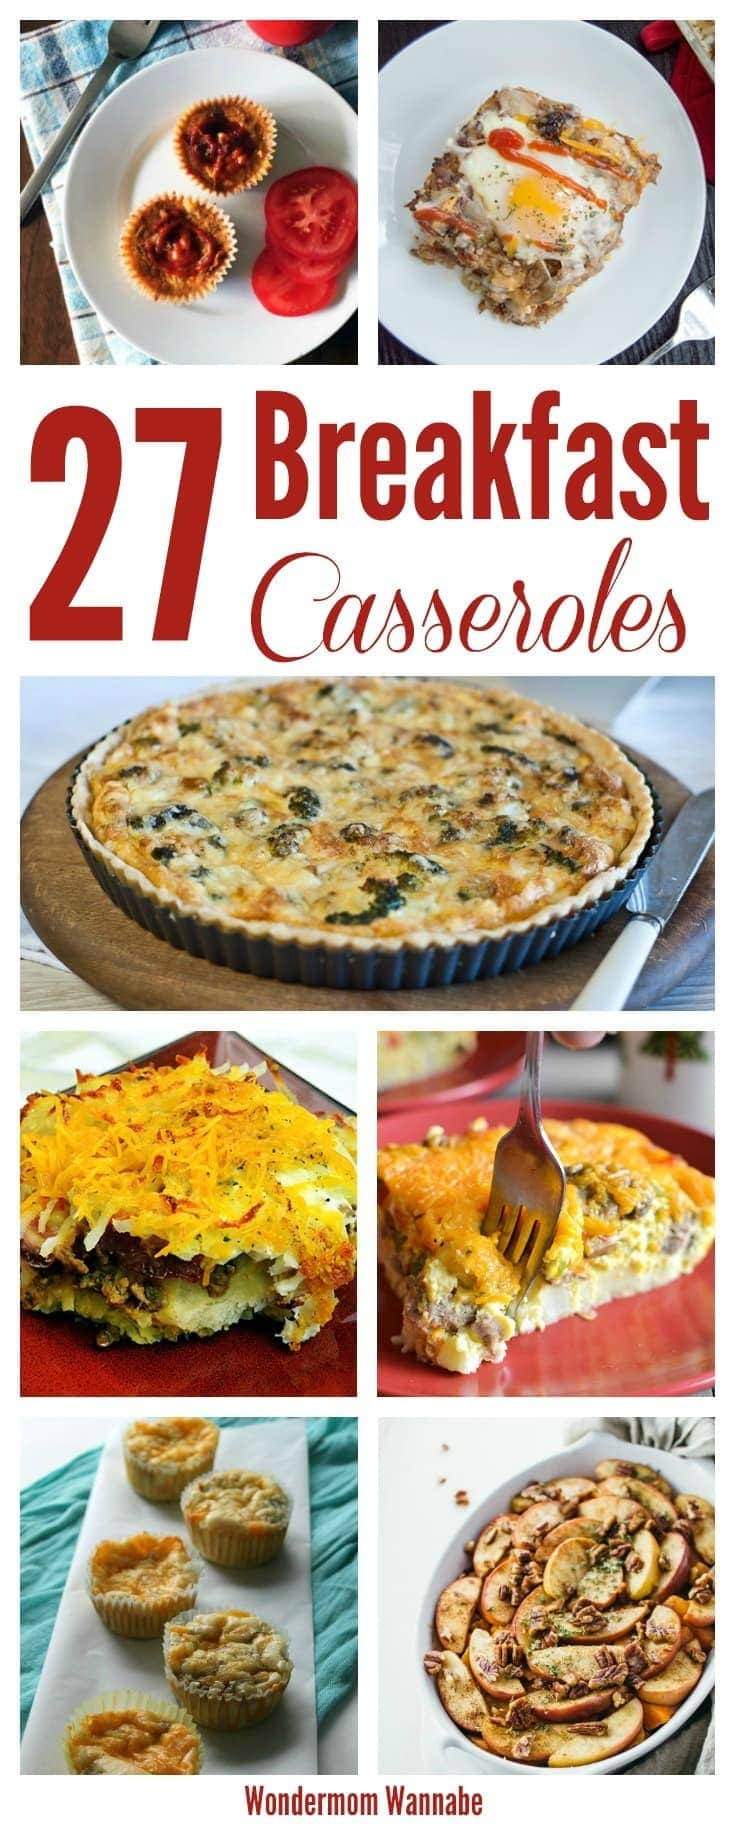 Amazing Breakfast Recipes
 27 Amazing Breakfast Casserole Recipes Your Family Will Love